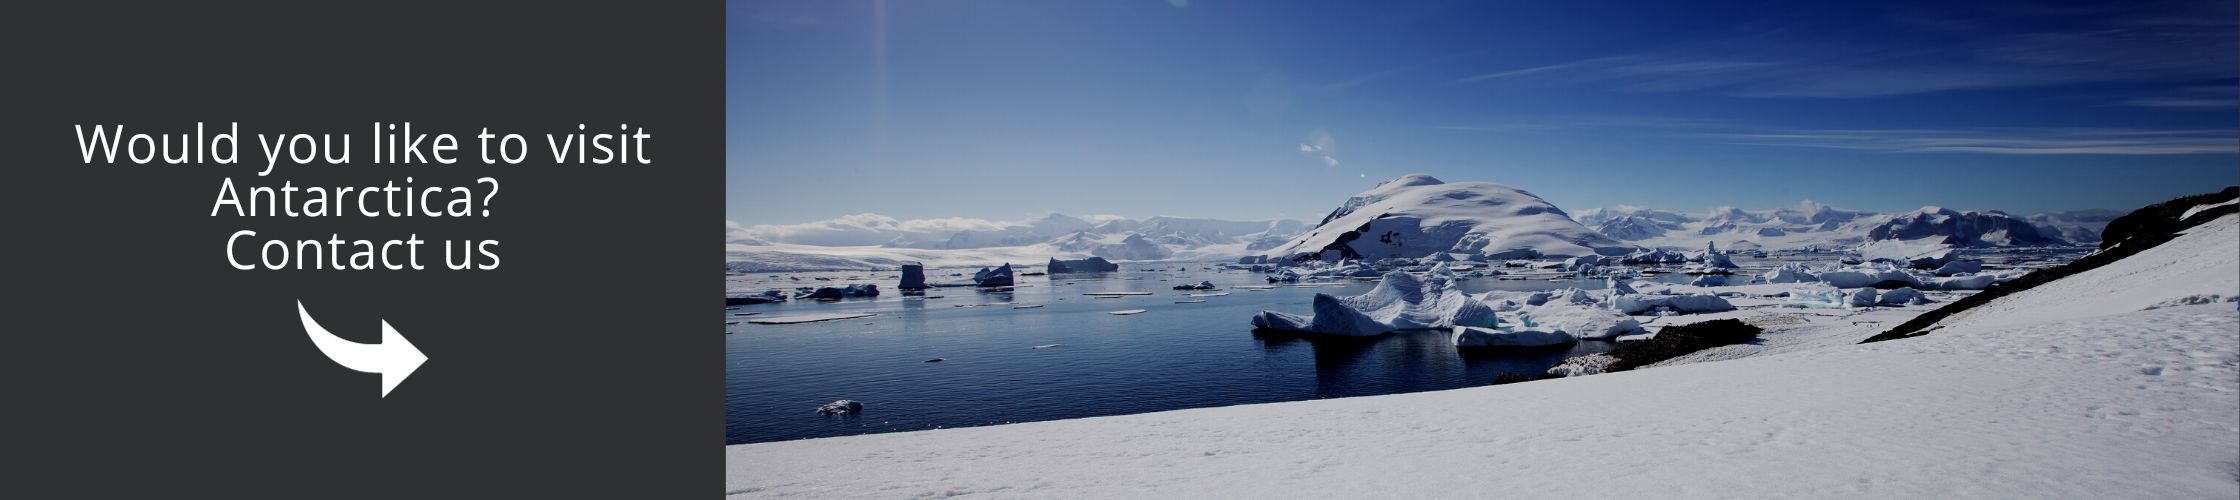 Visit Antarctica with us